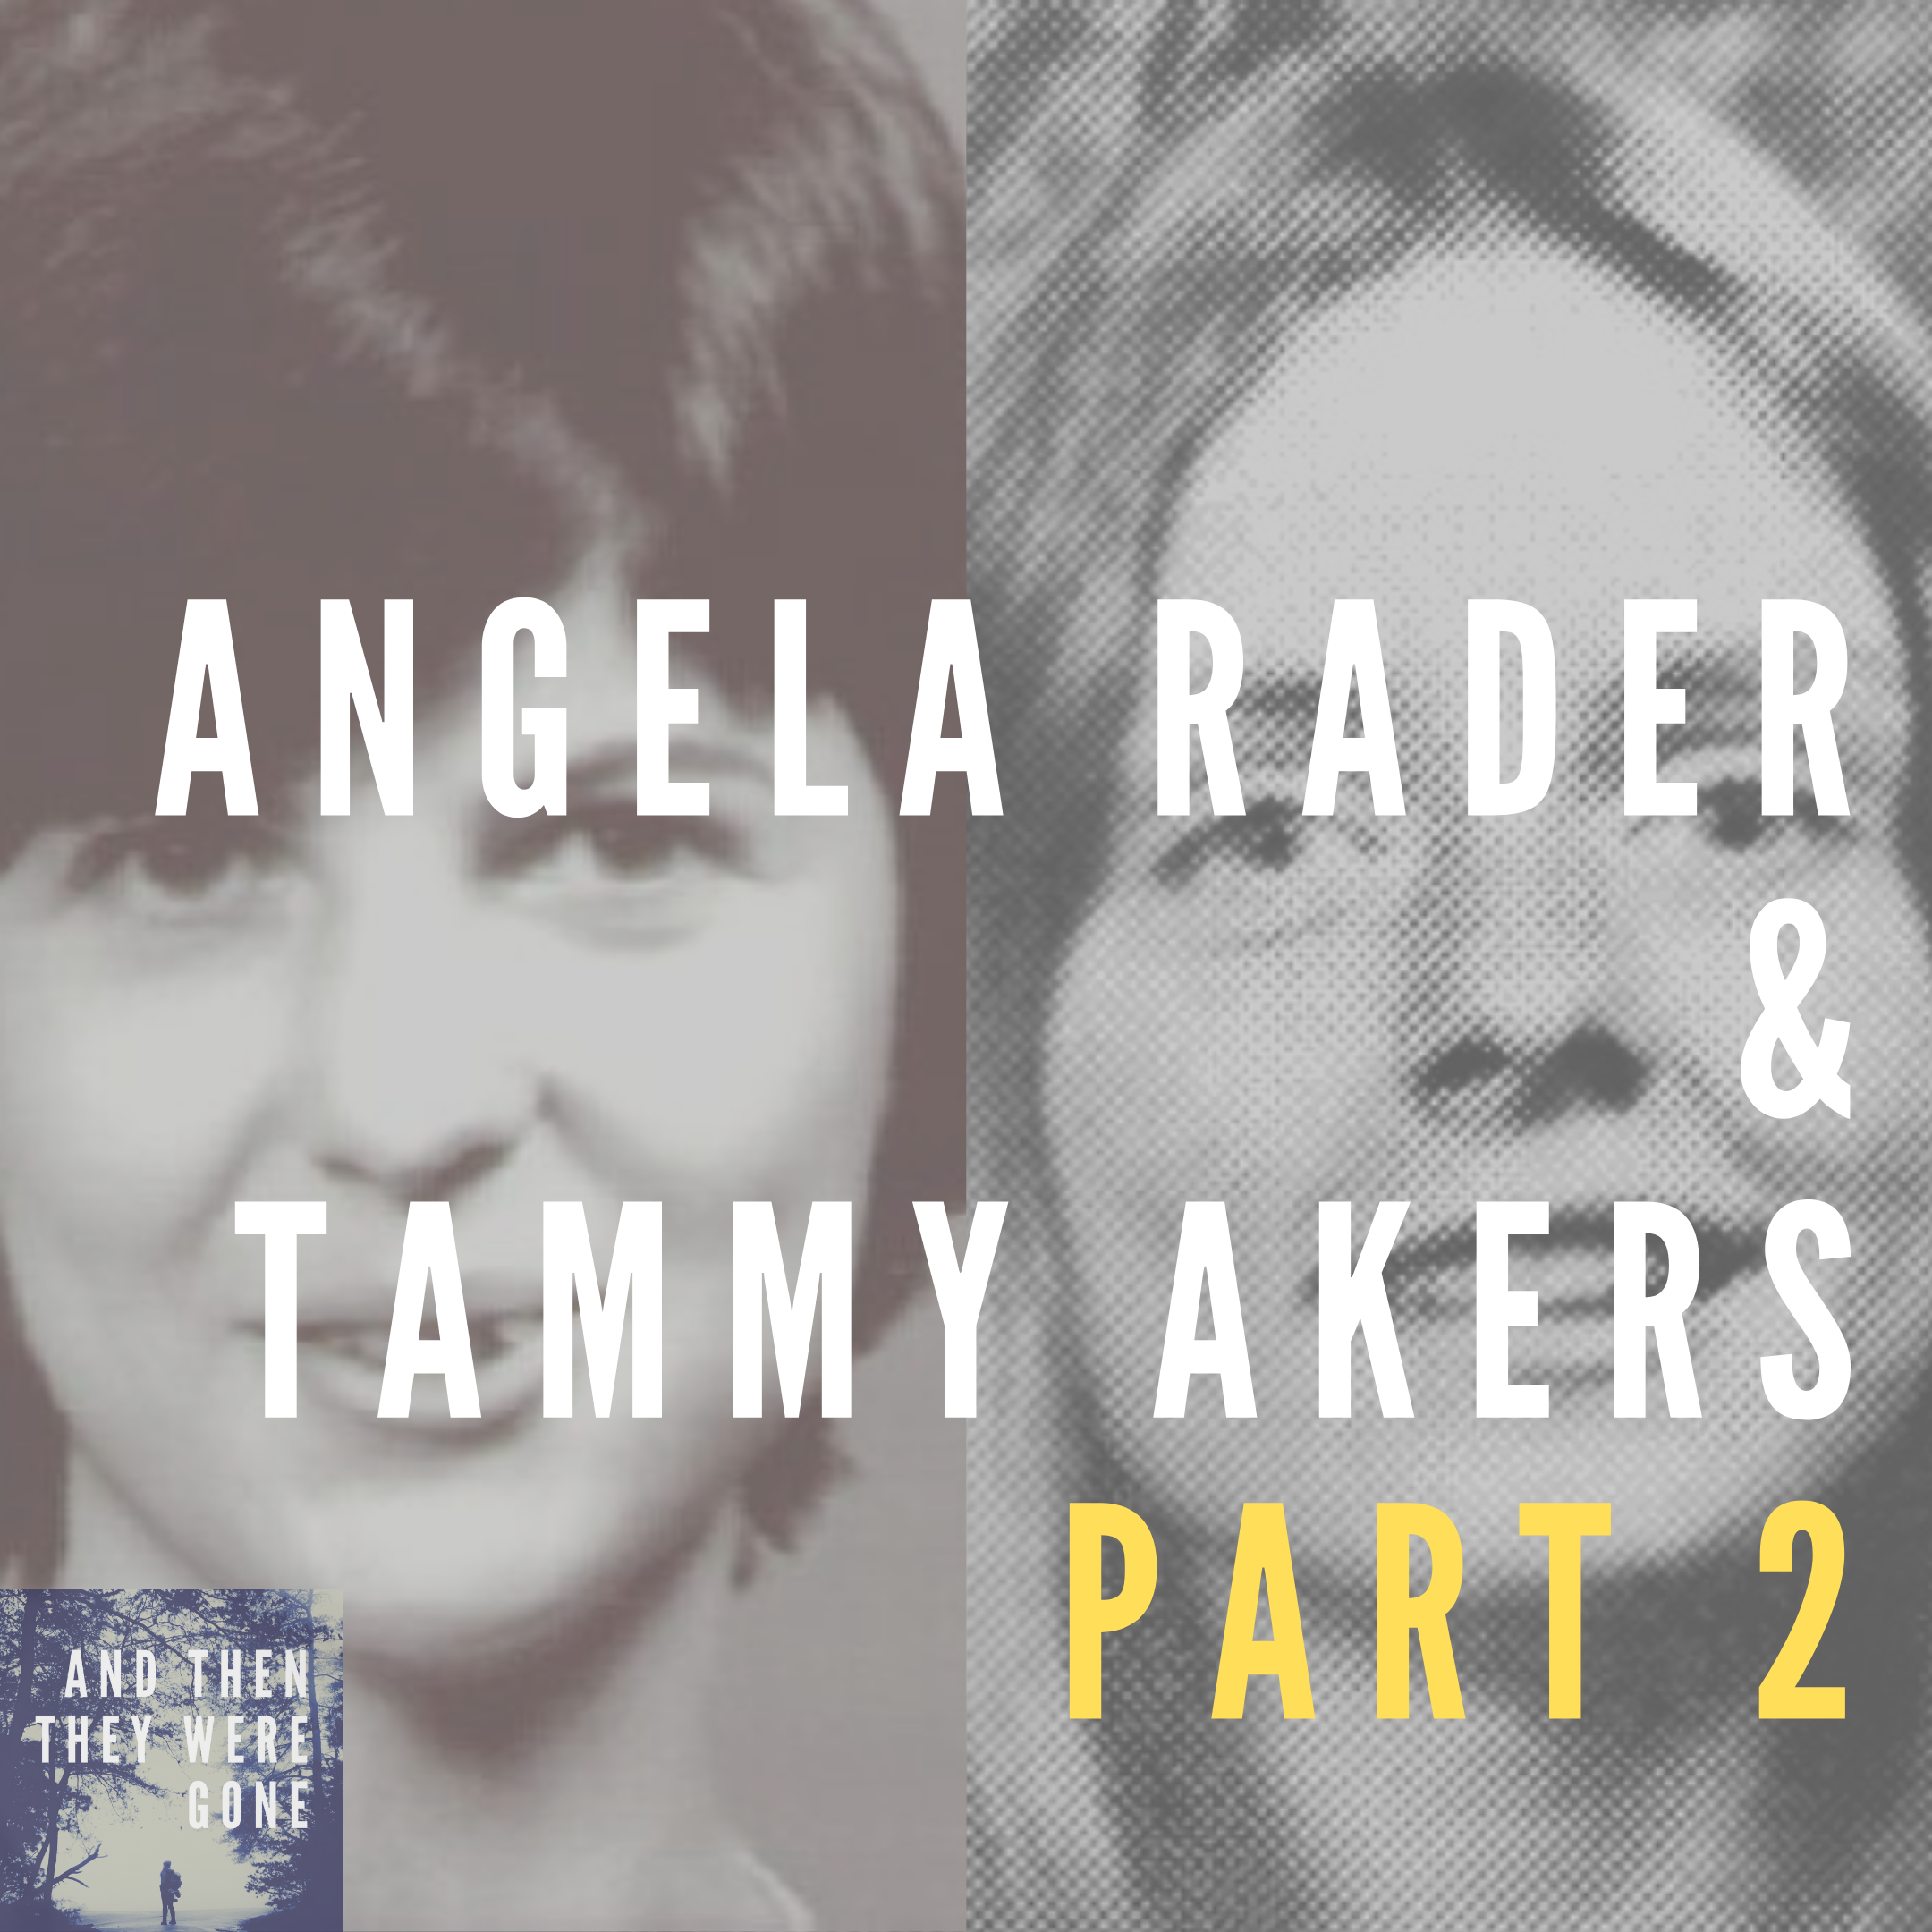 Angela Mae Rader and Tammy Lynn Akers: Missing since 2/7/77